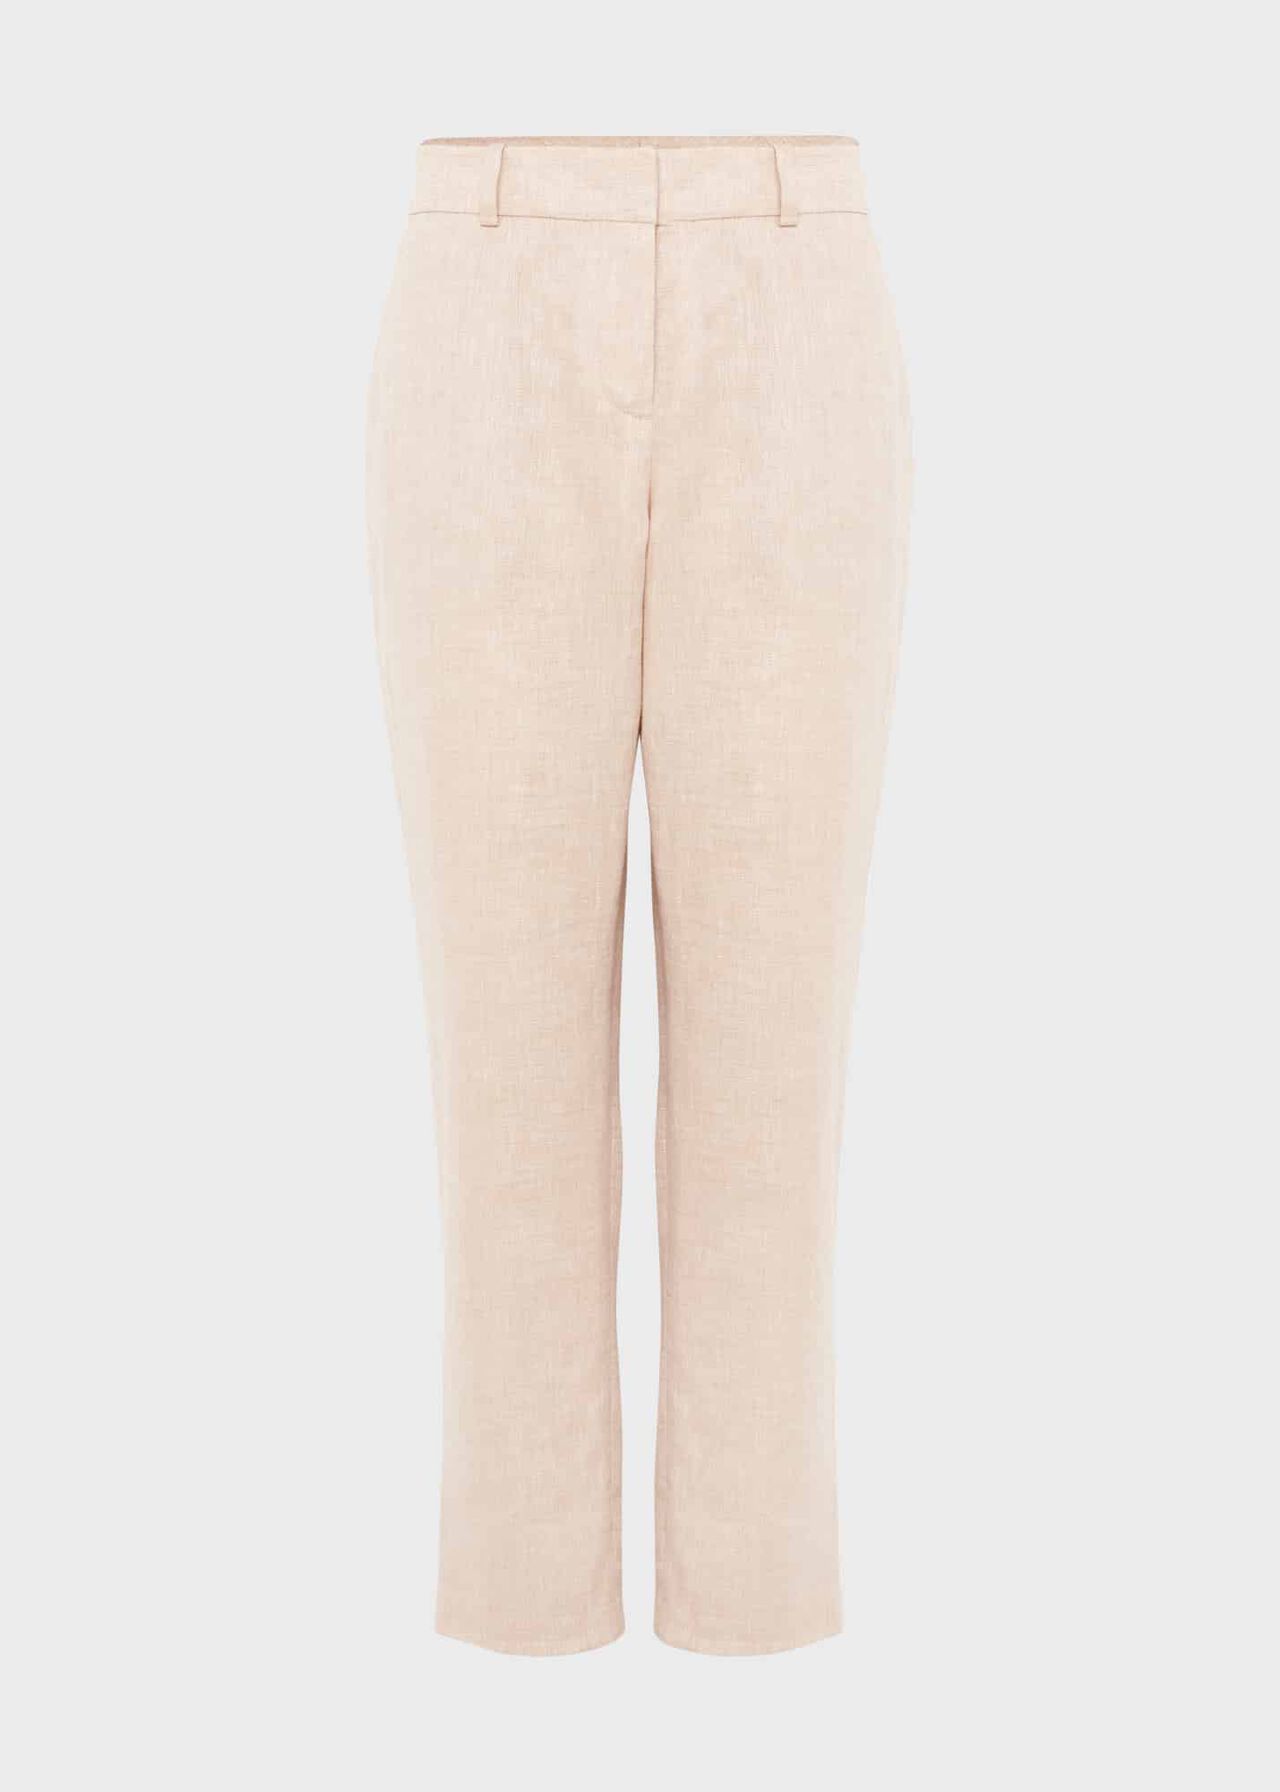 Petite Ivana Linen Trousers, Warm Neutral, hi-res